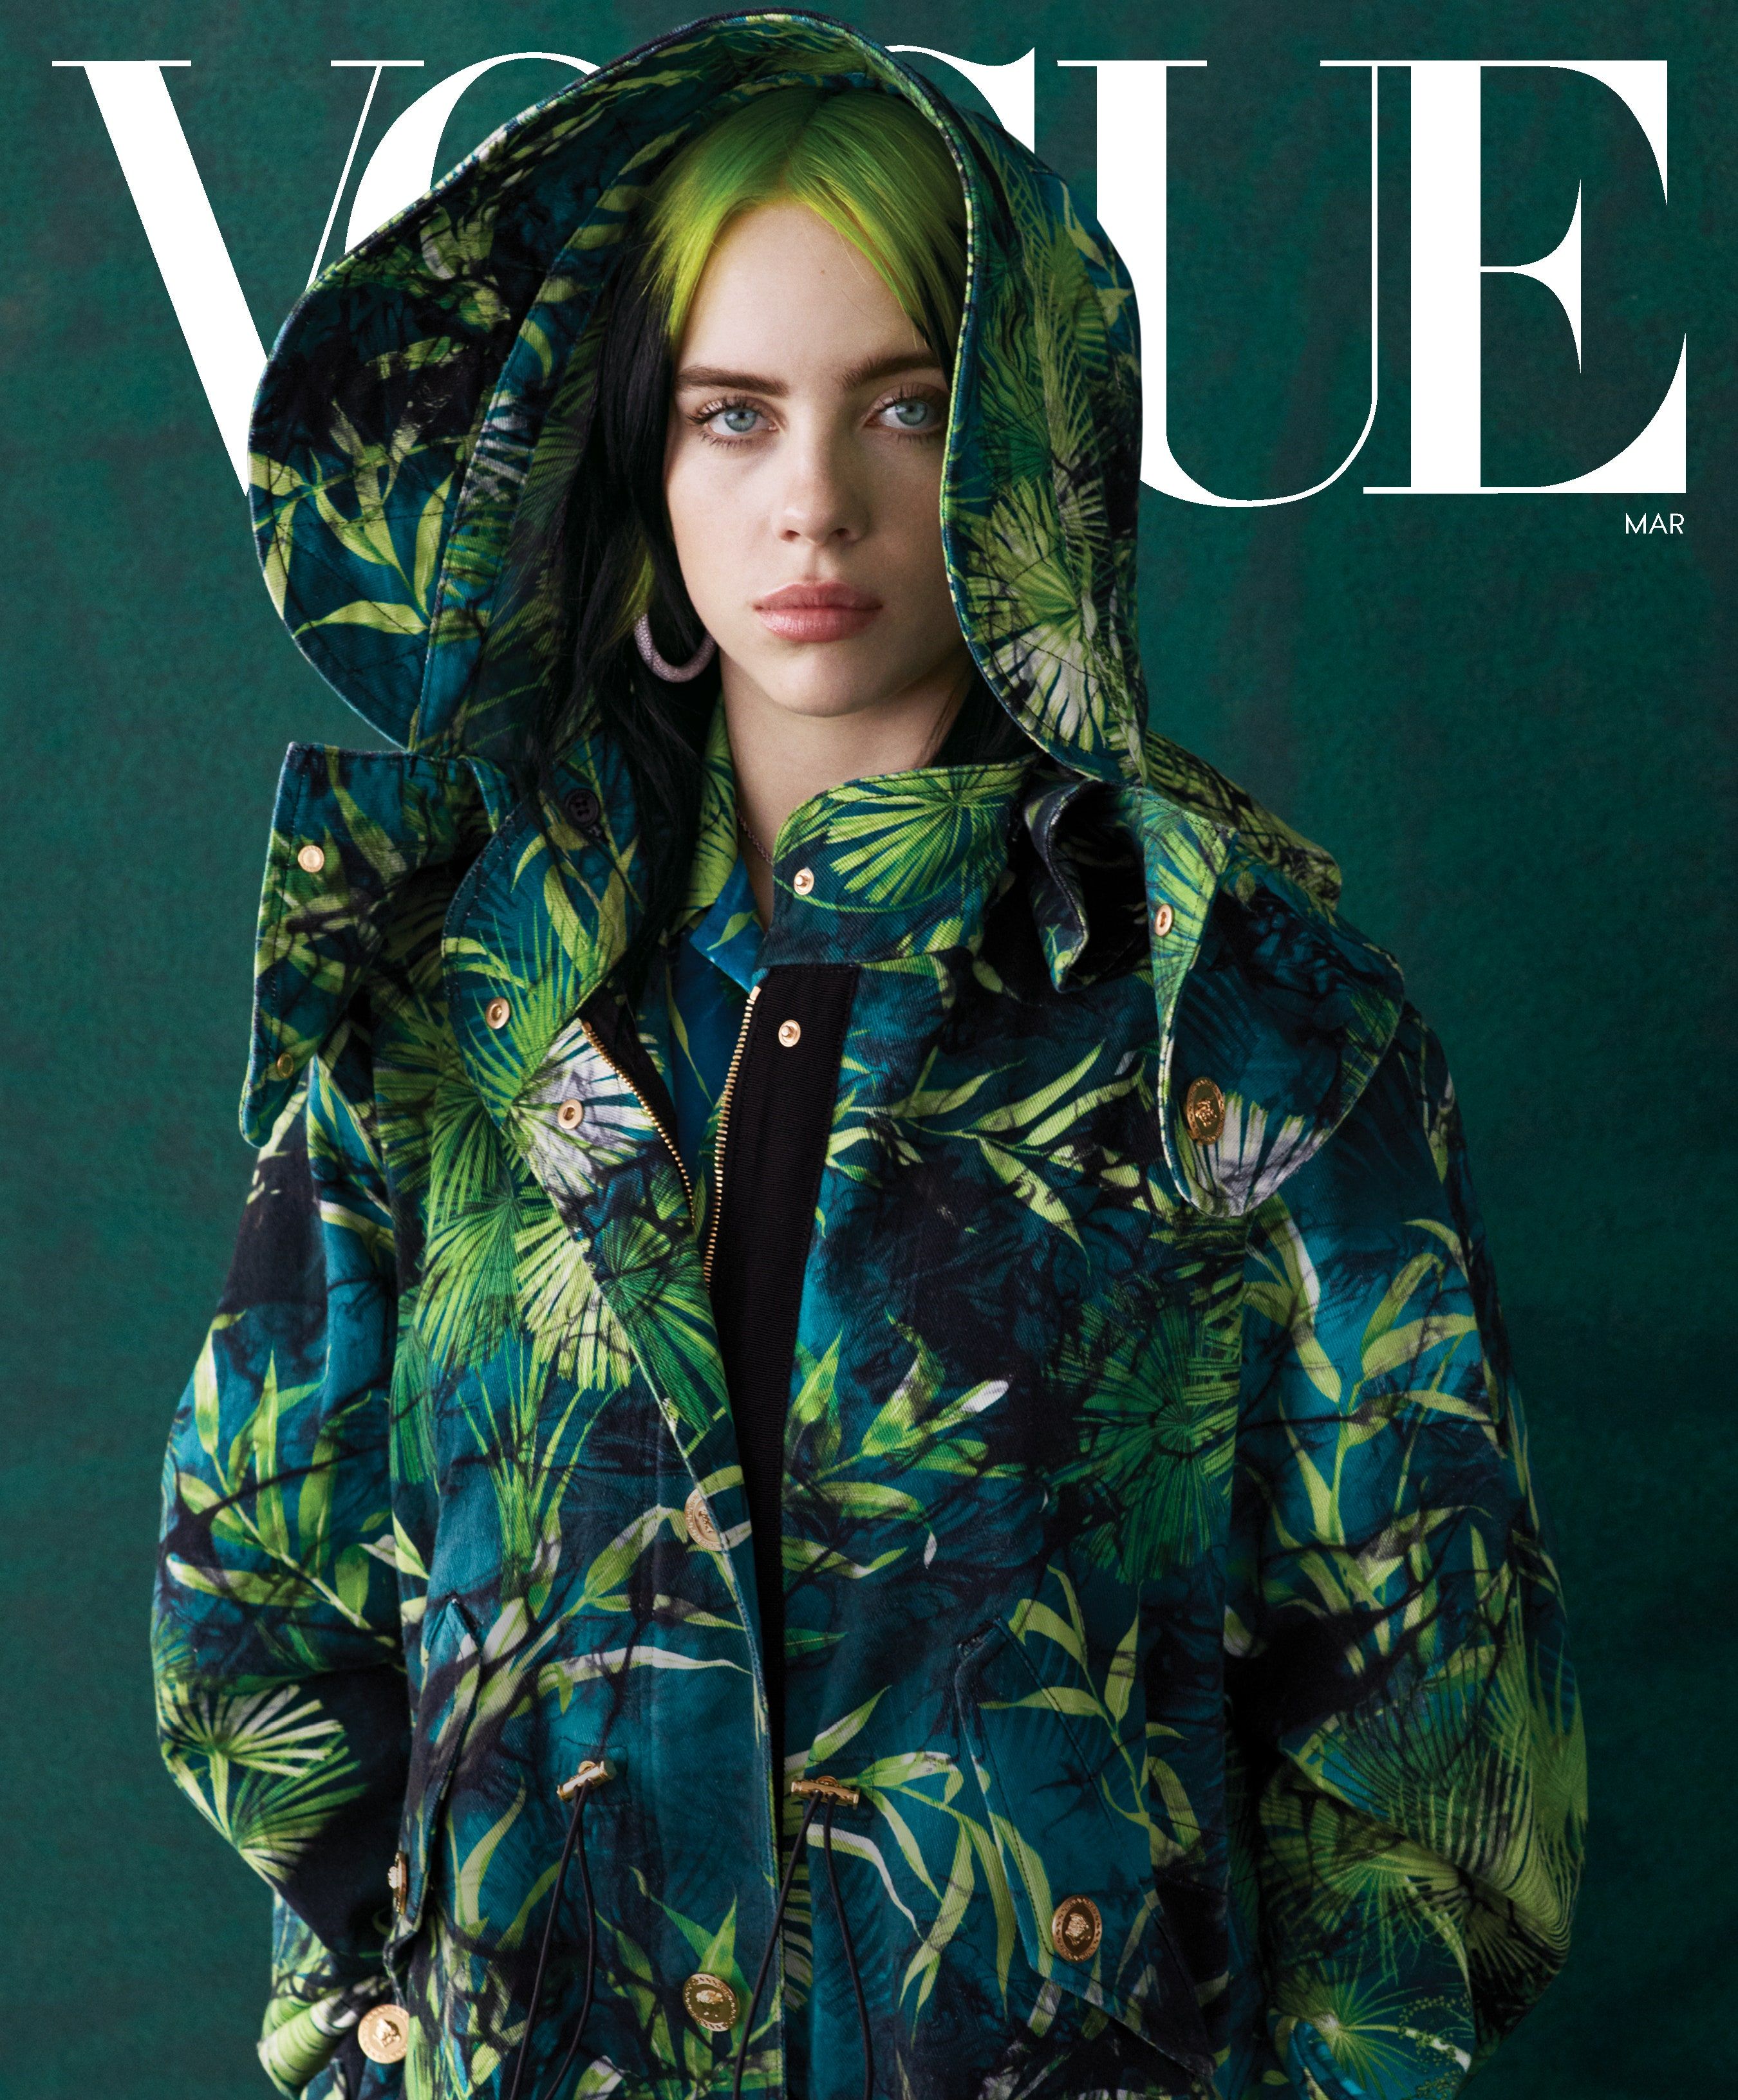 Billie Eilish's Vogue Cover: How the Singer Is Reinventing Pop Stardom